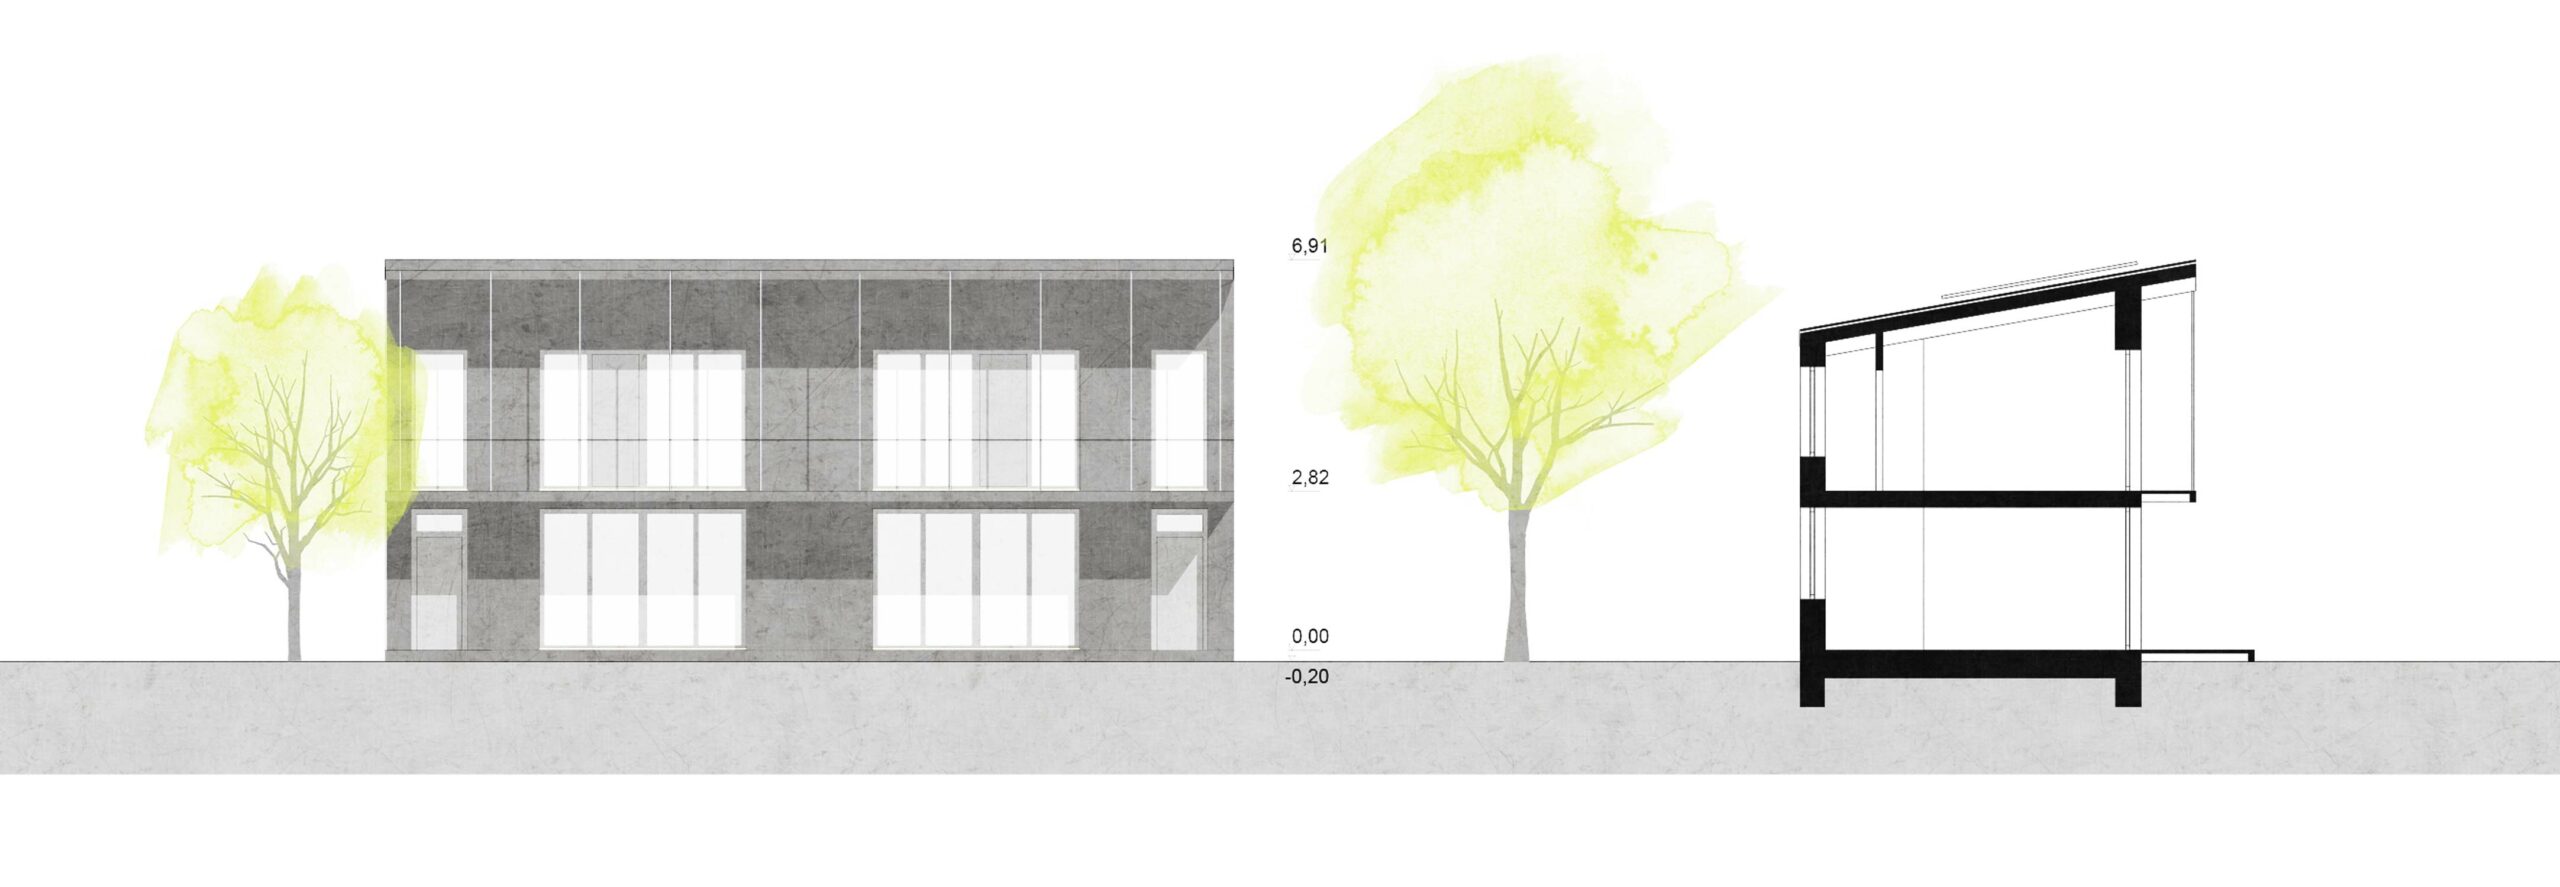 STUDIOKUBIK-studio-kubik-architektur-architecture-berlin-two-family-house-semi-detached-house-sc-an-3